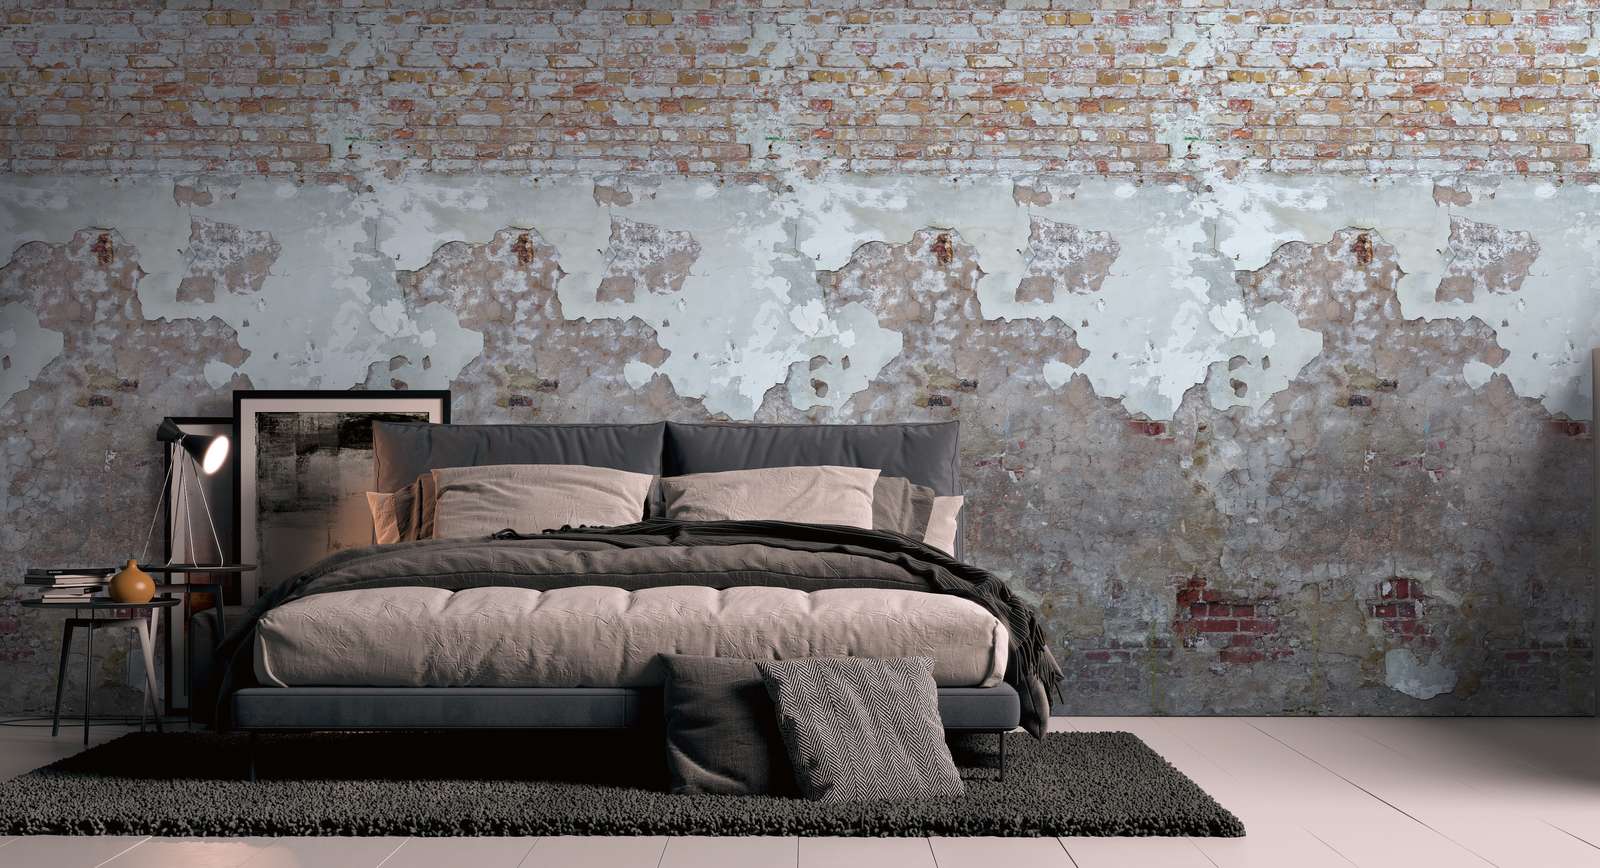             Stone wall effect wallpaper in used look - grey, beige, red
        